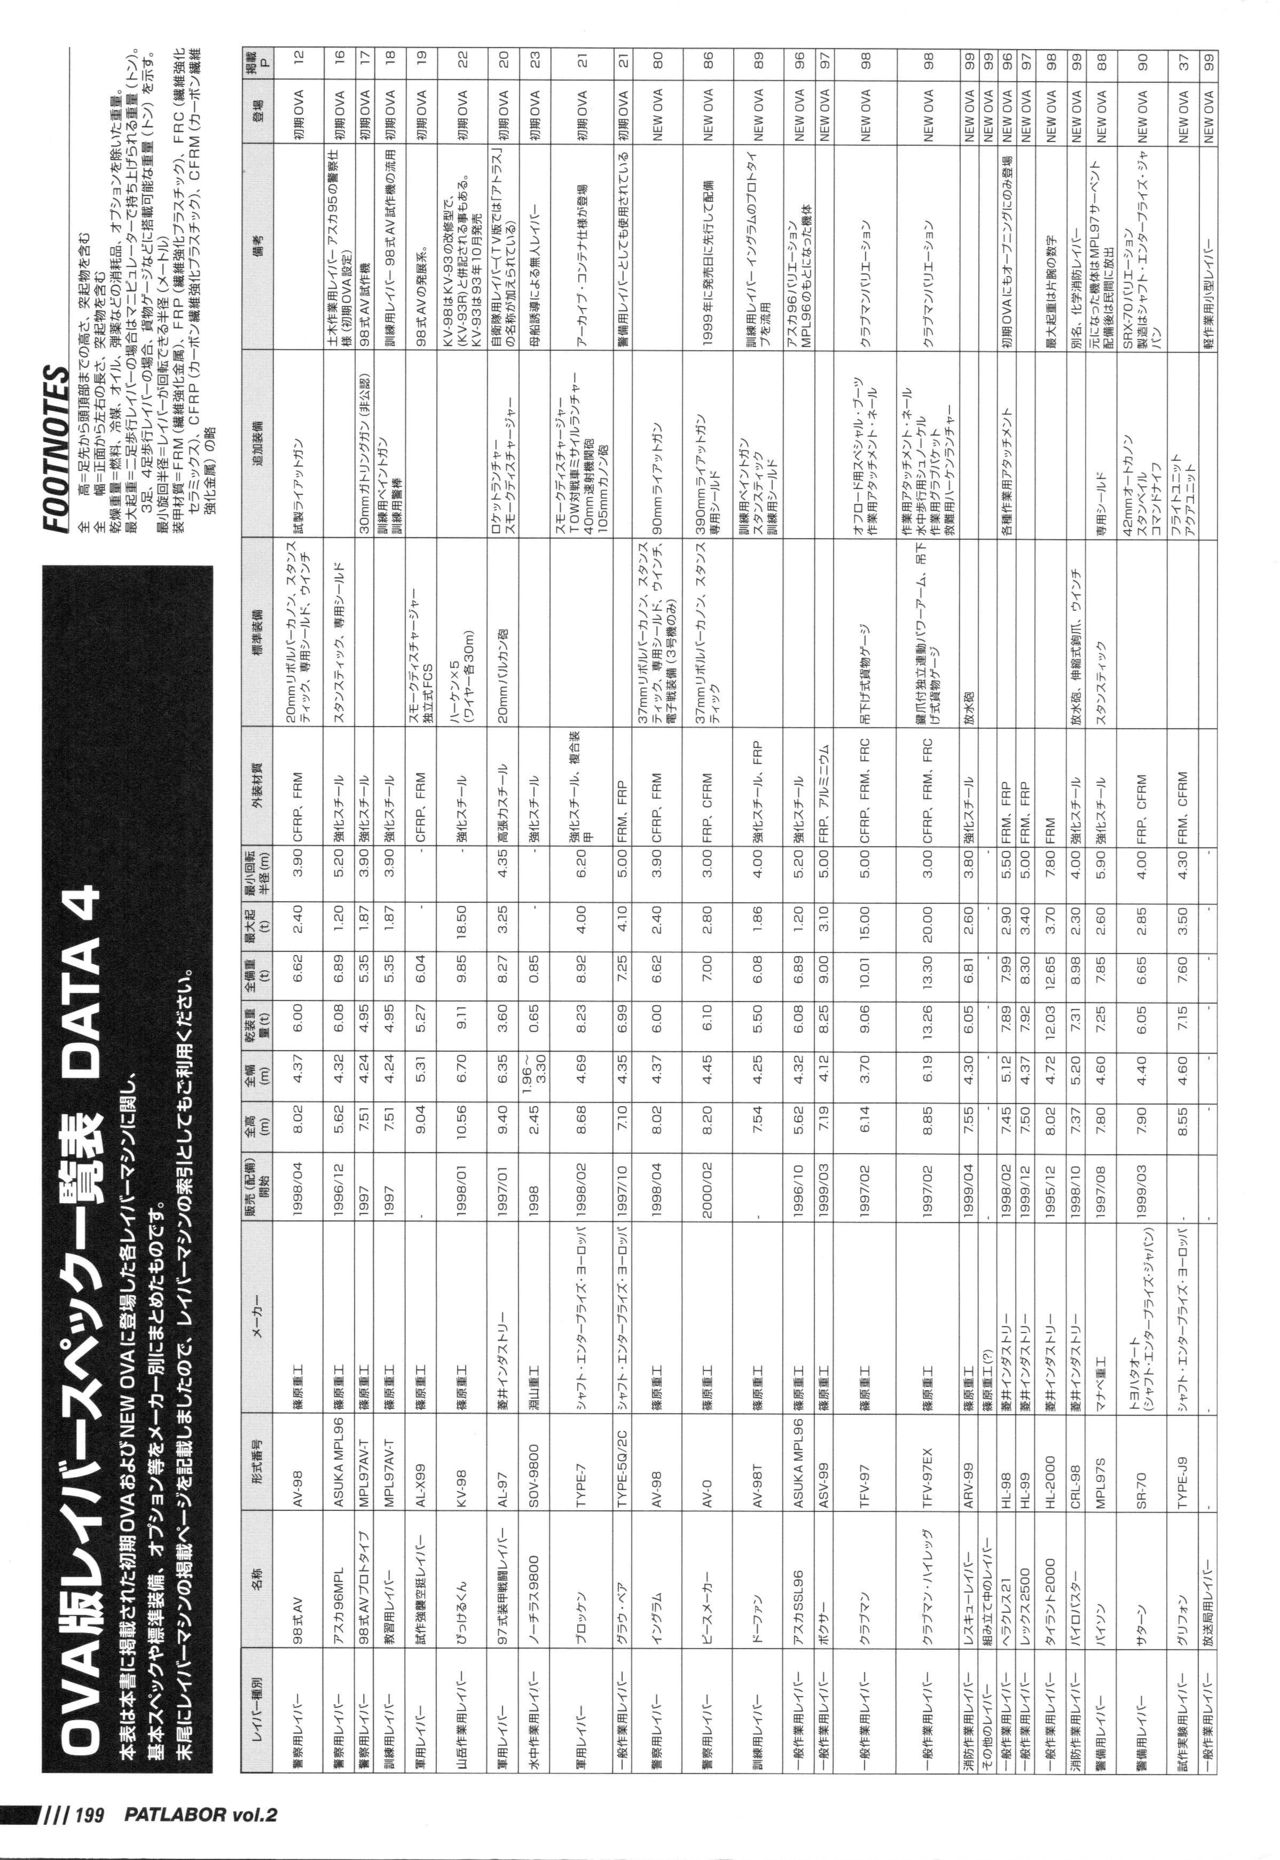 Patlabor: Perfect Establishment Data Vol.2 - OVA 204